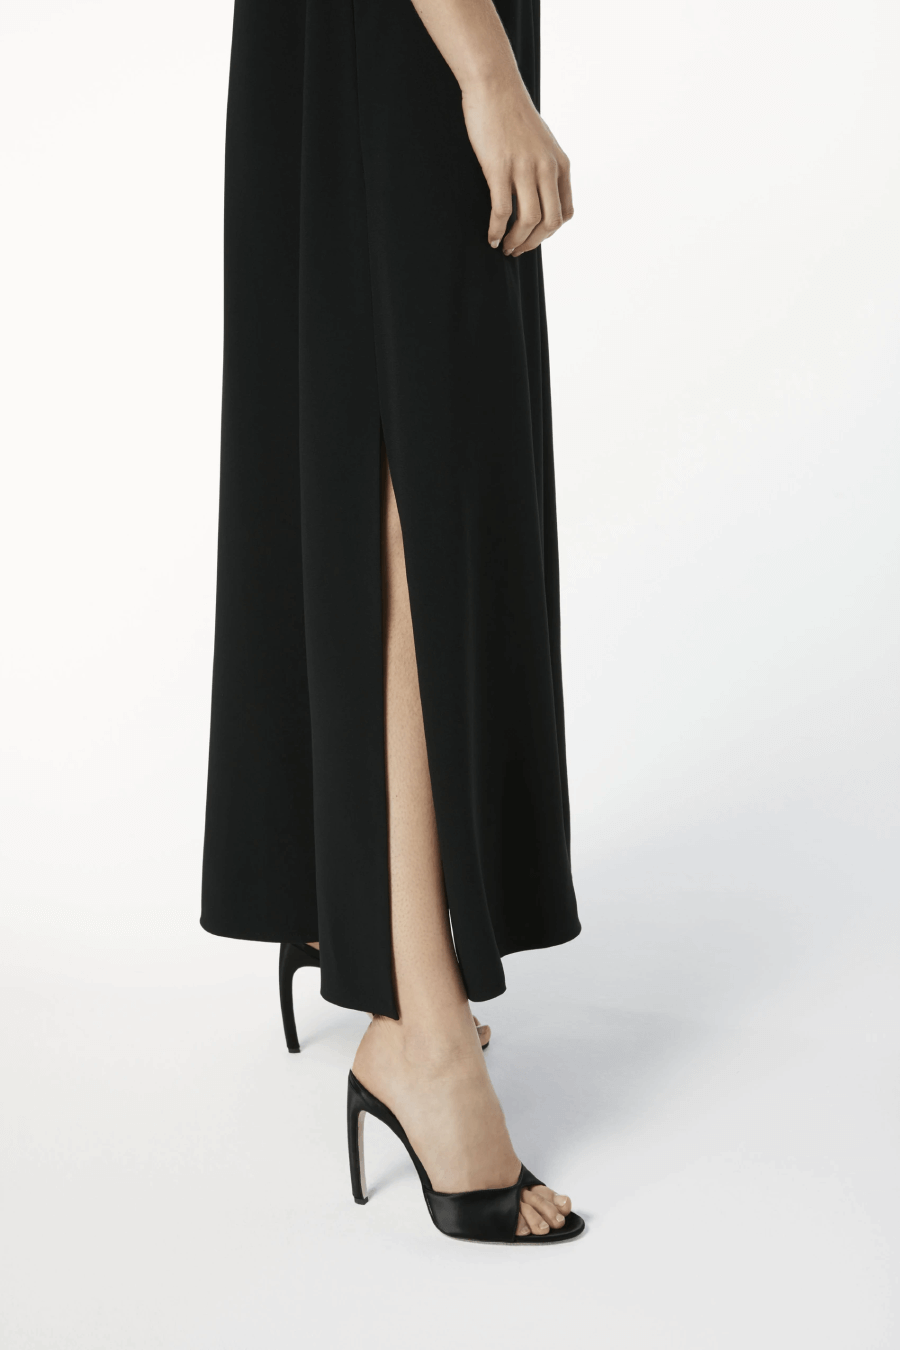 Victoria Beckham 1121WDR002328A Sleeveless Keyhole Midi Dress - Black Side